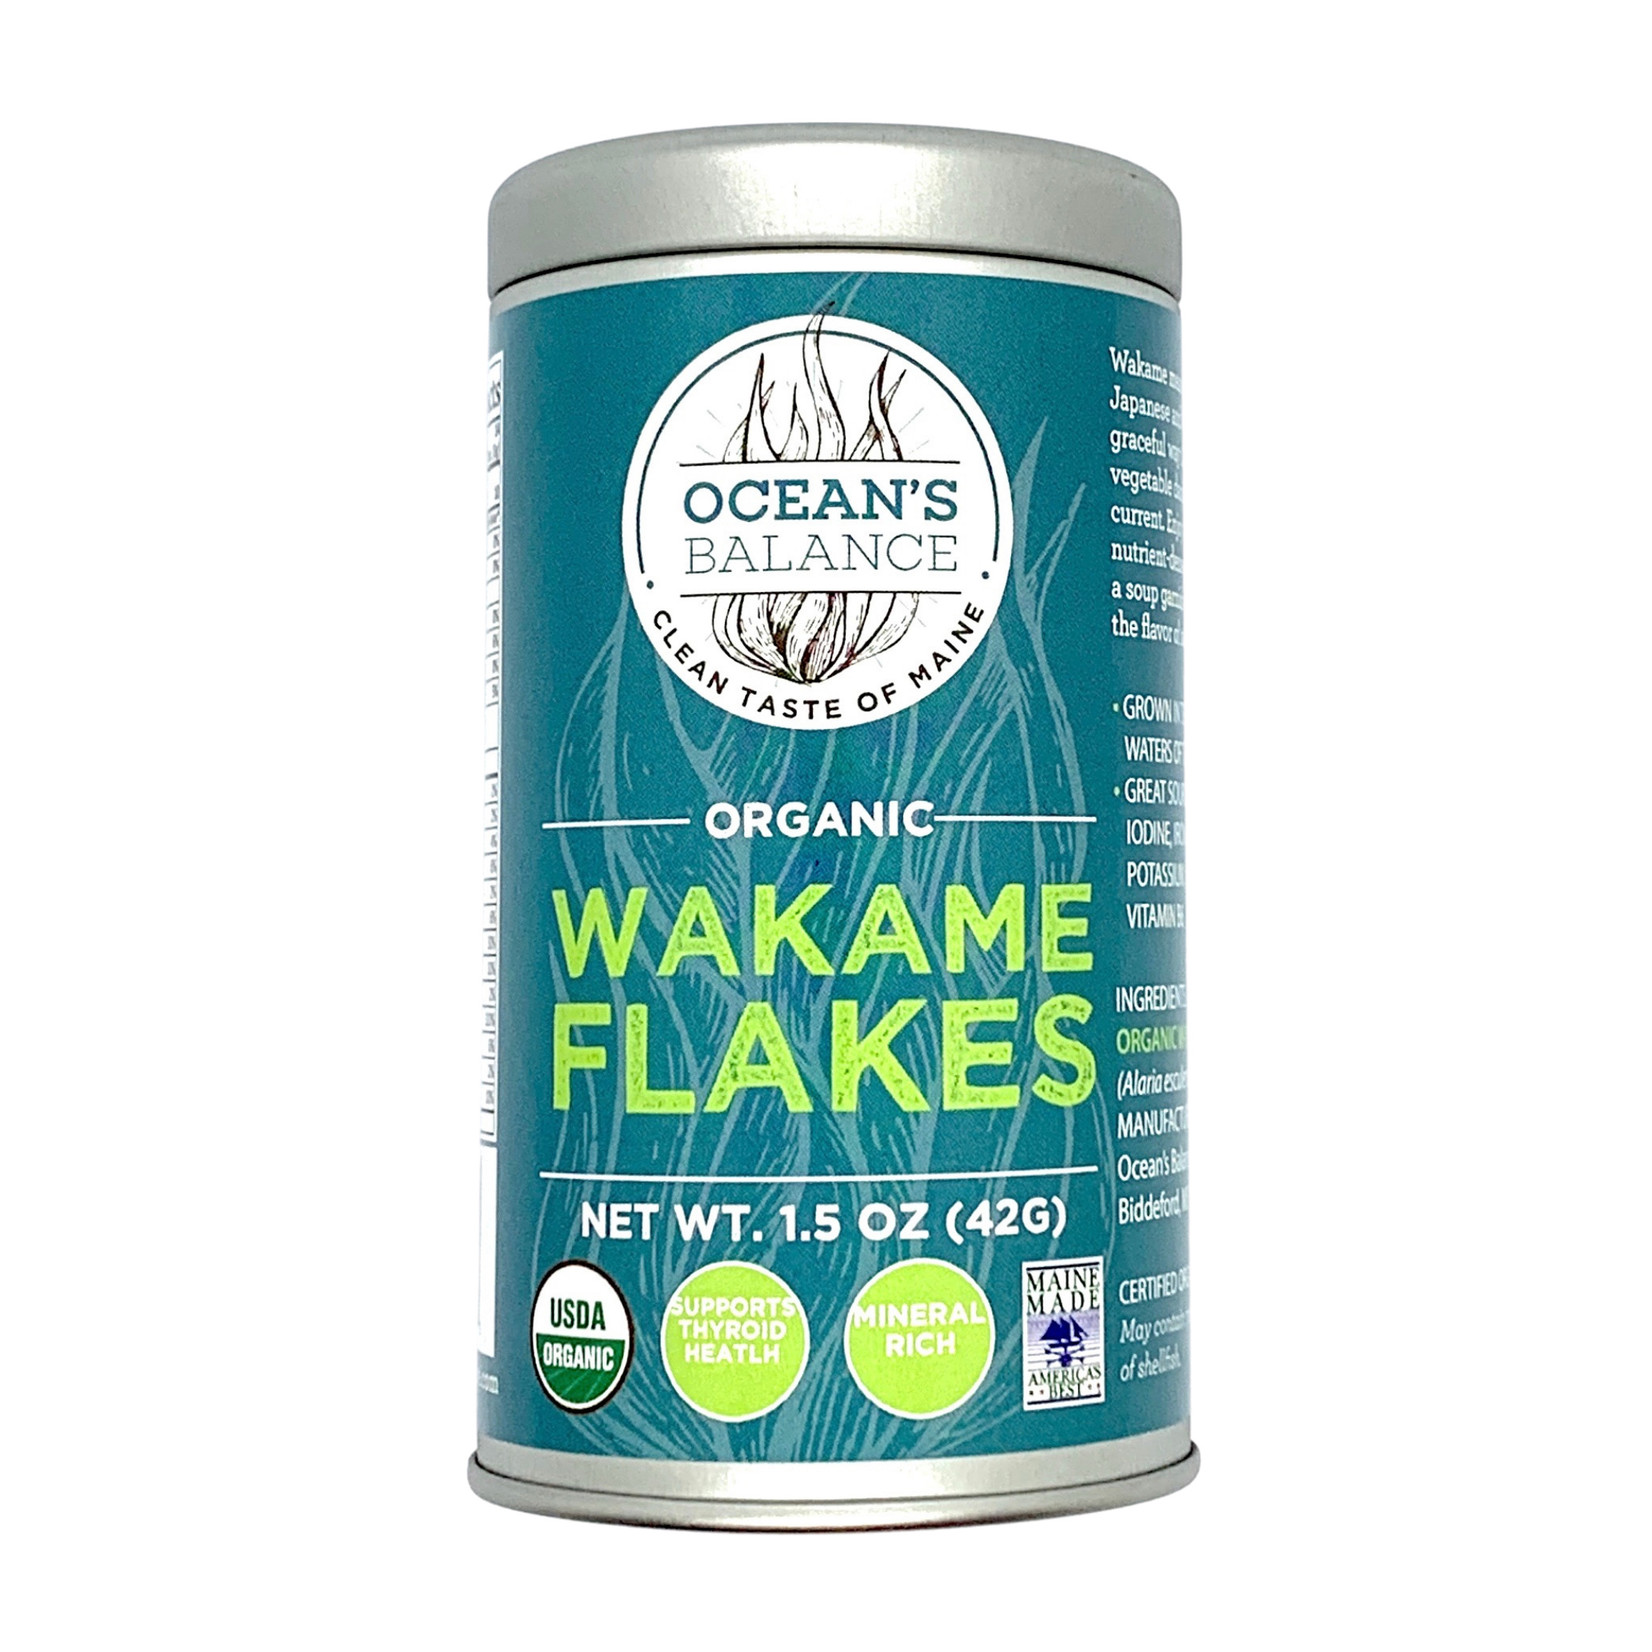 Ocean's Balance organic wakame flakes